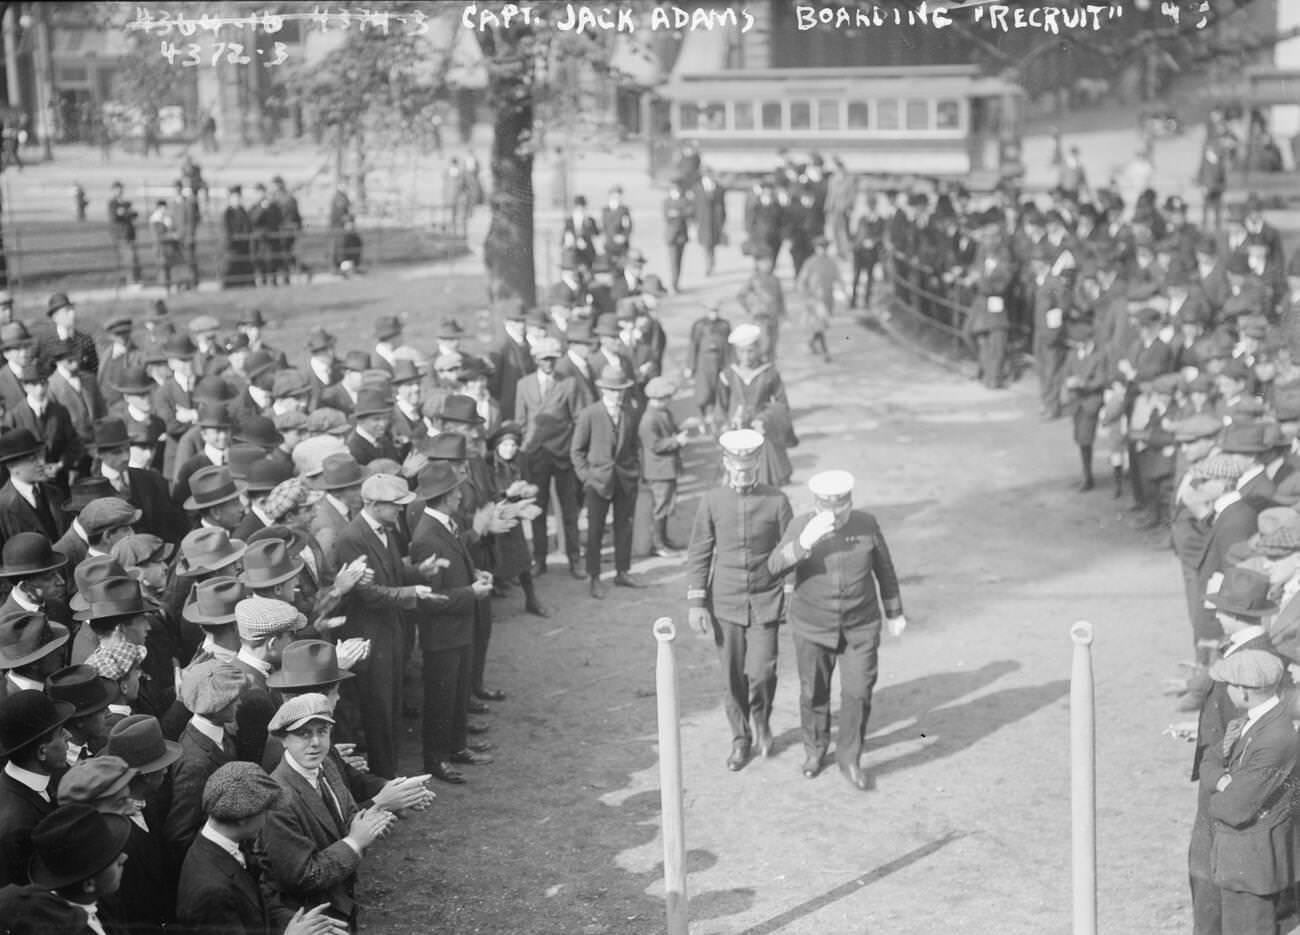 Captain Jack Adams Boarding The Uss Recruit, 1917.